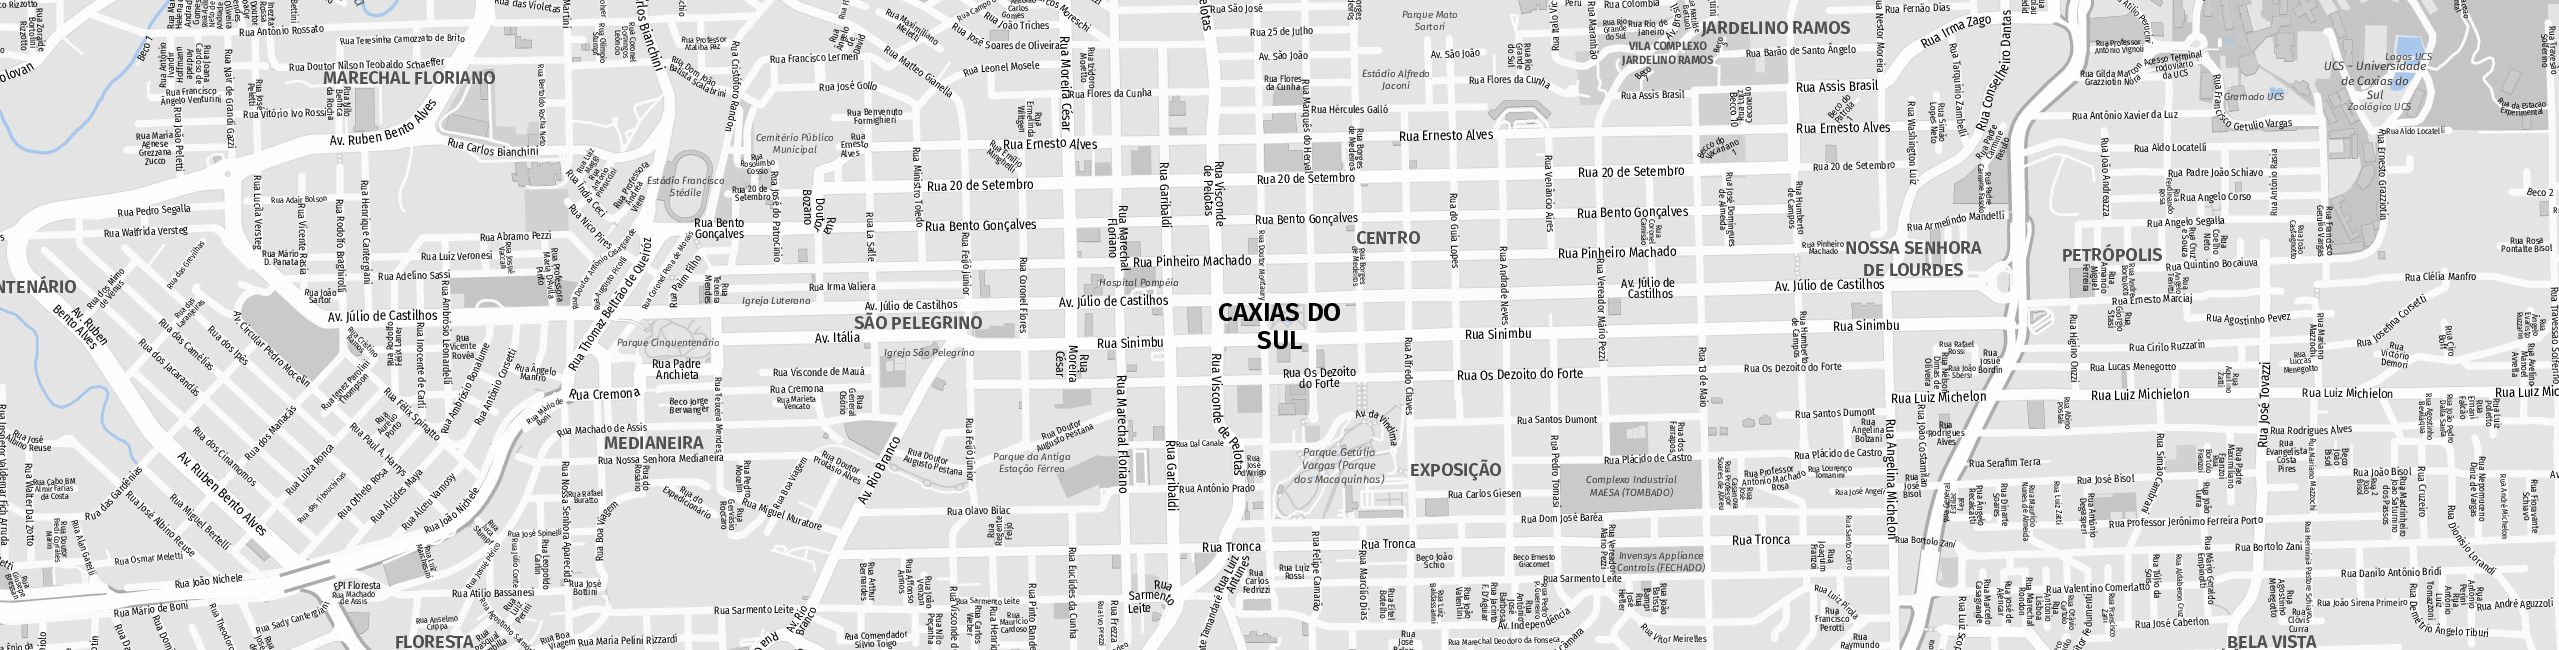 Stadtplan Caxias do Sul zum Downloaden.